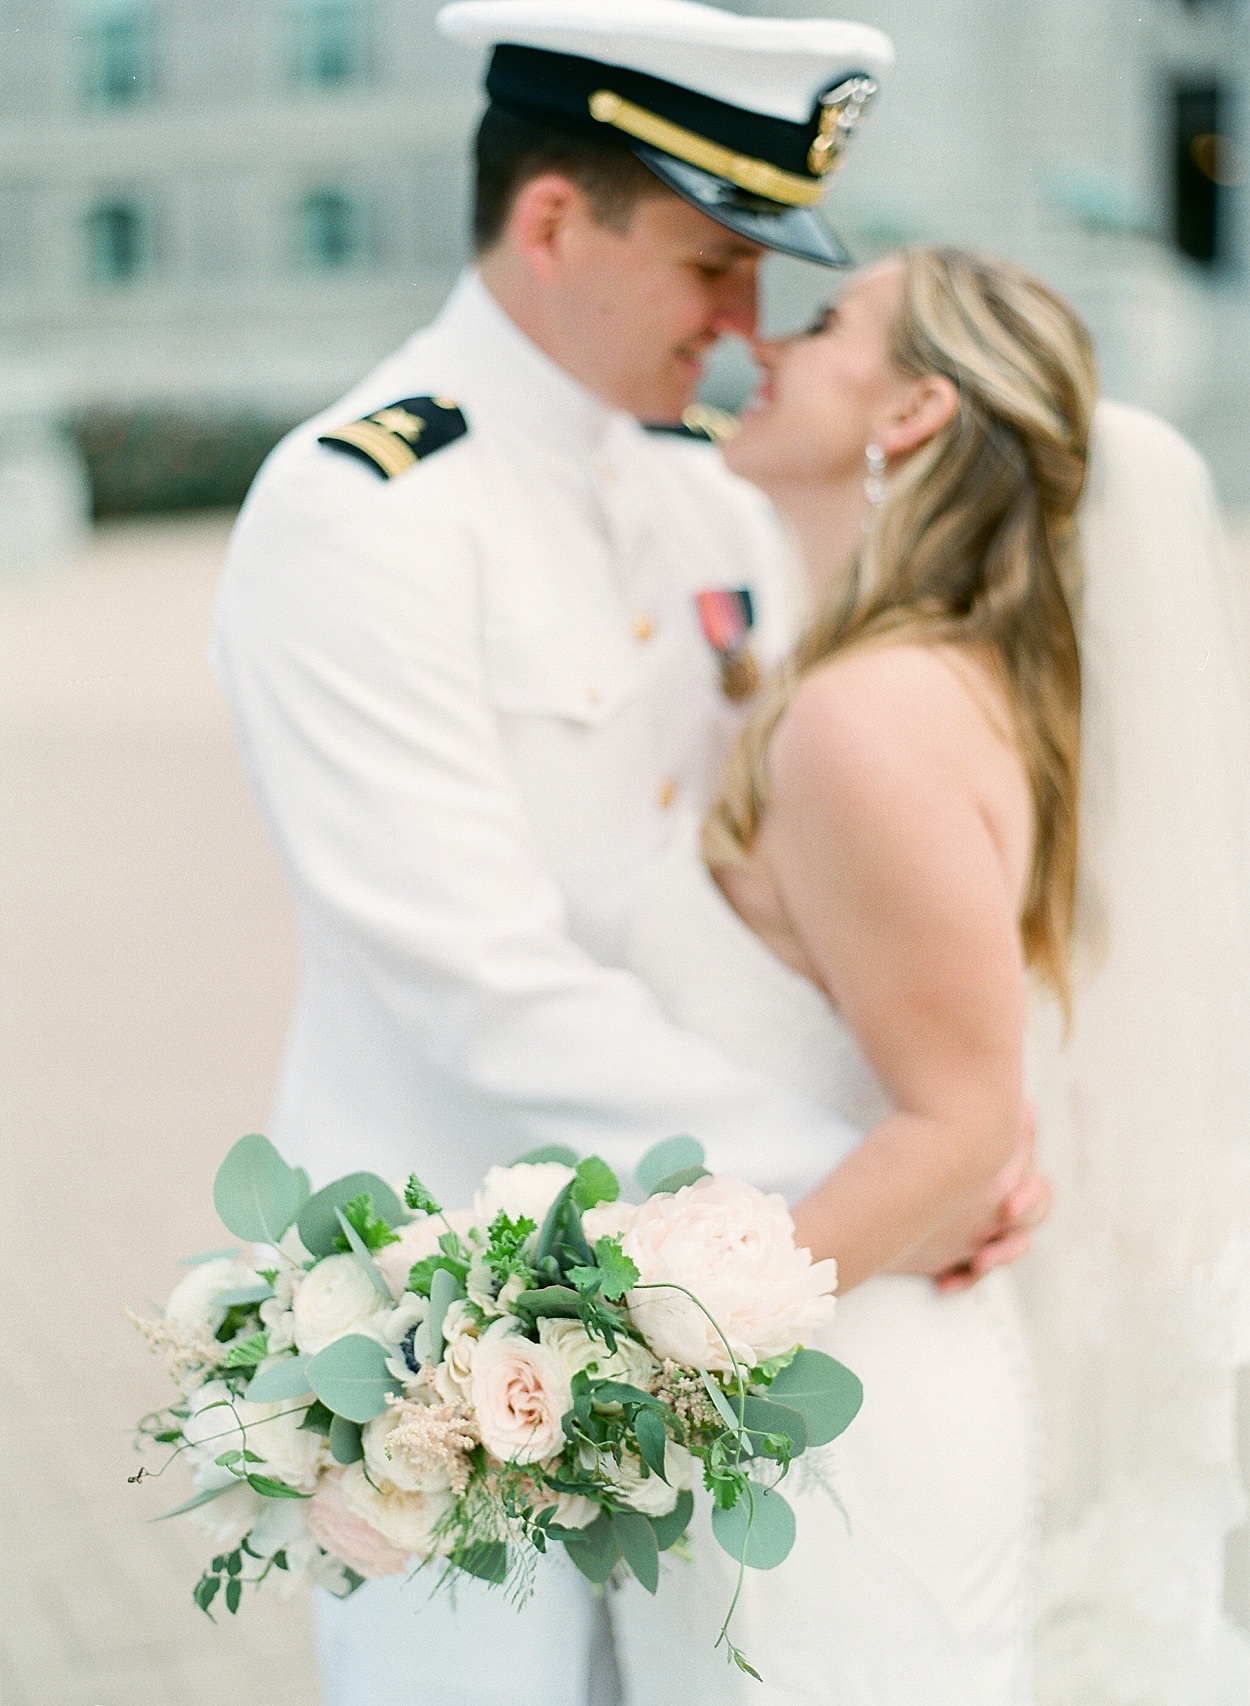 USNA & Chesapeake Bay Maritime Museum wedding | Abby Grace Photography